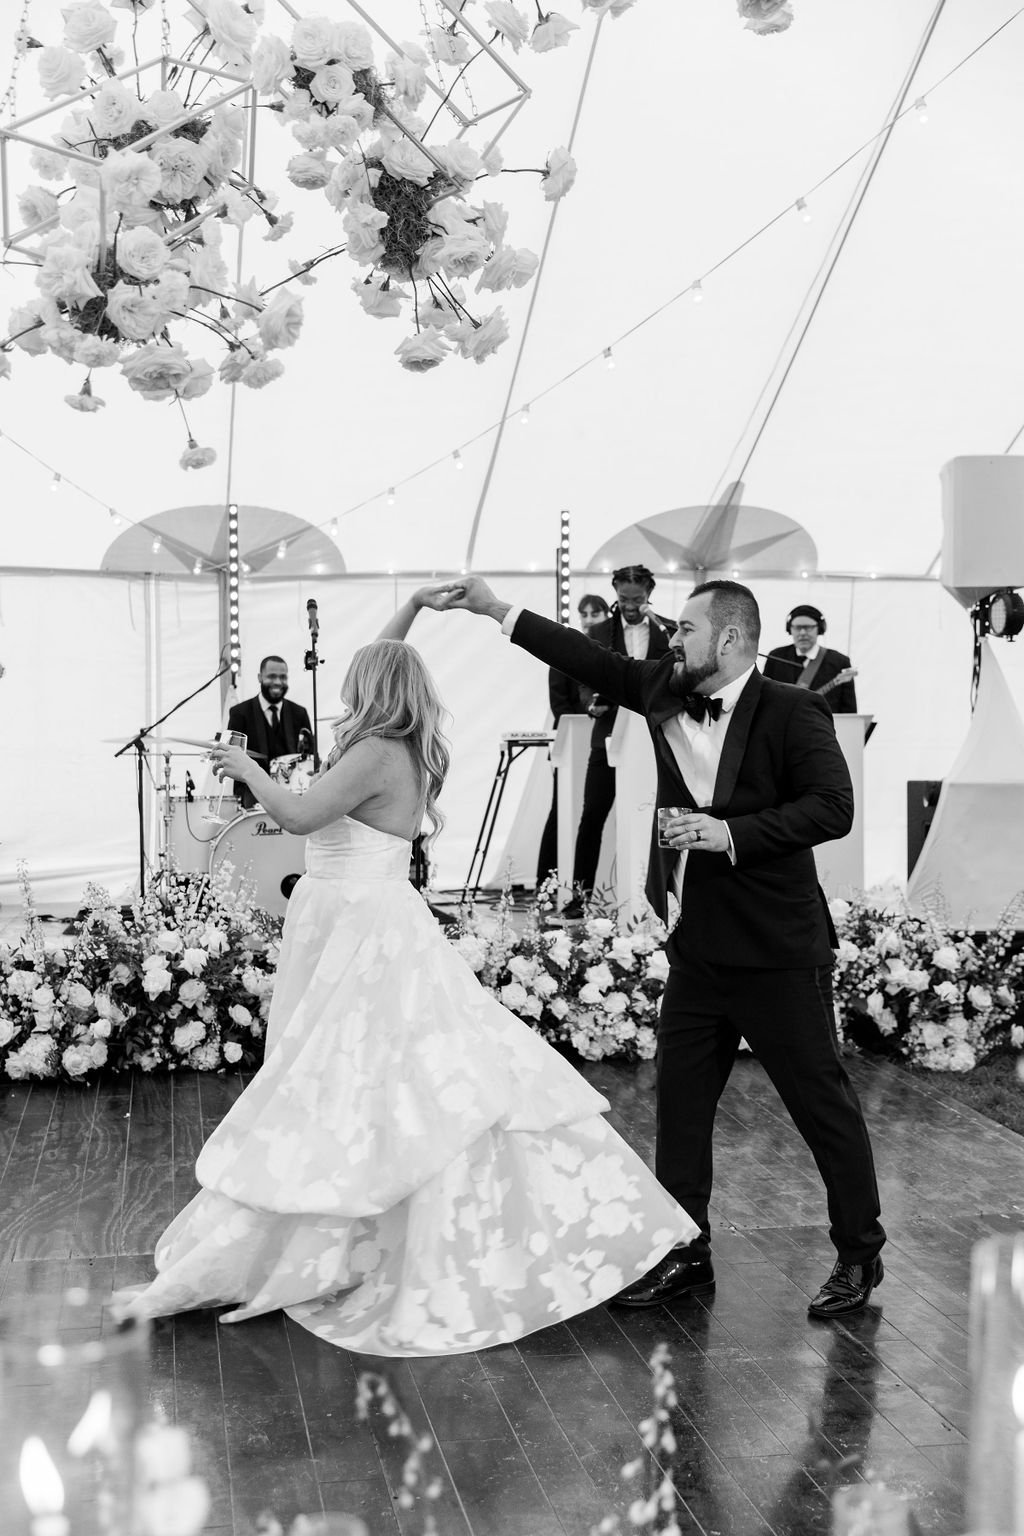  outdoor wedding first dance tent reception caolina herrera strapless gown white florals  